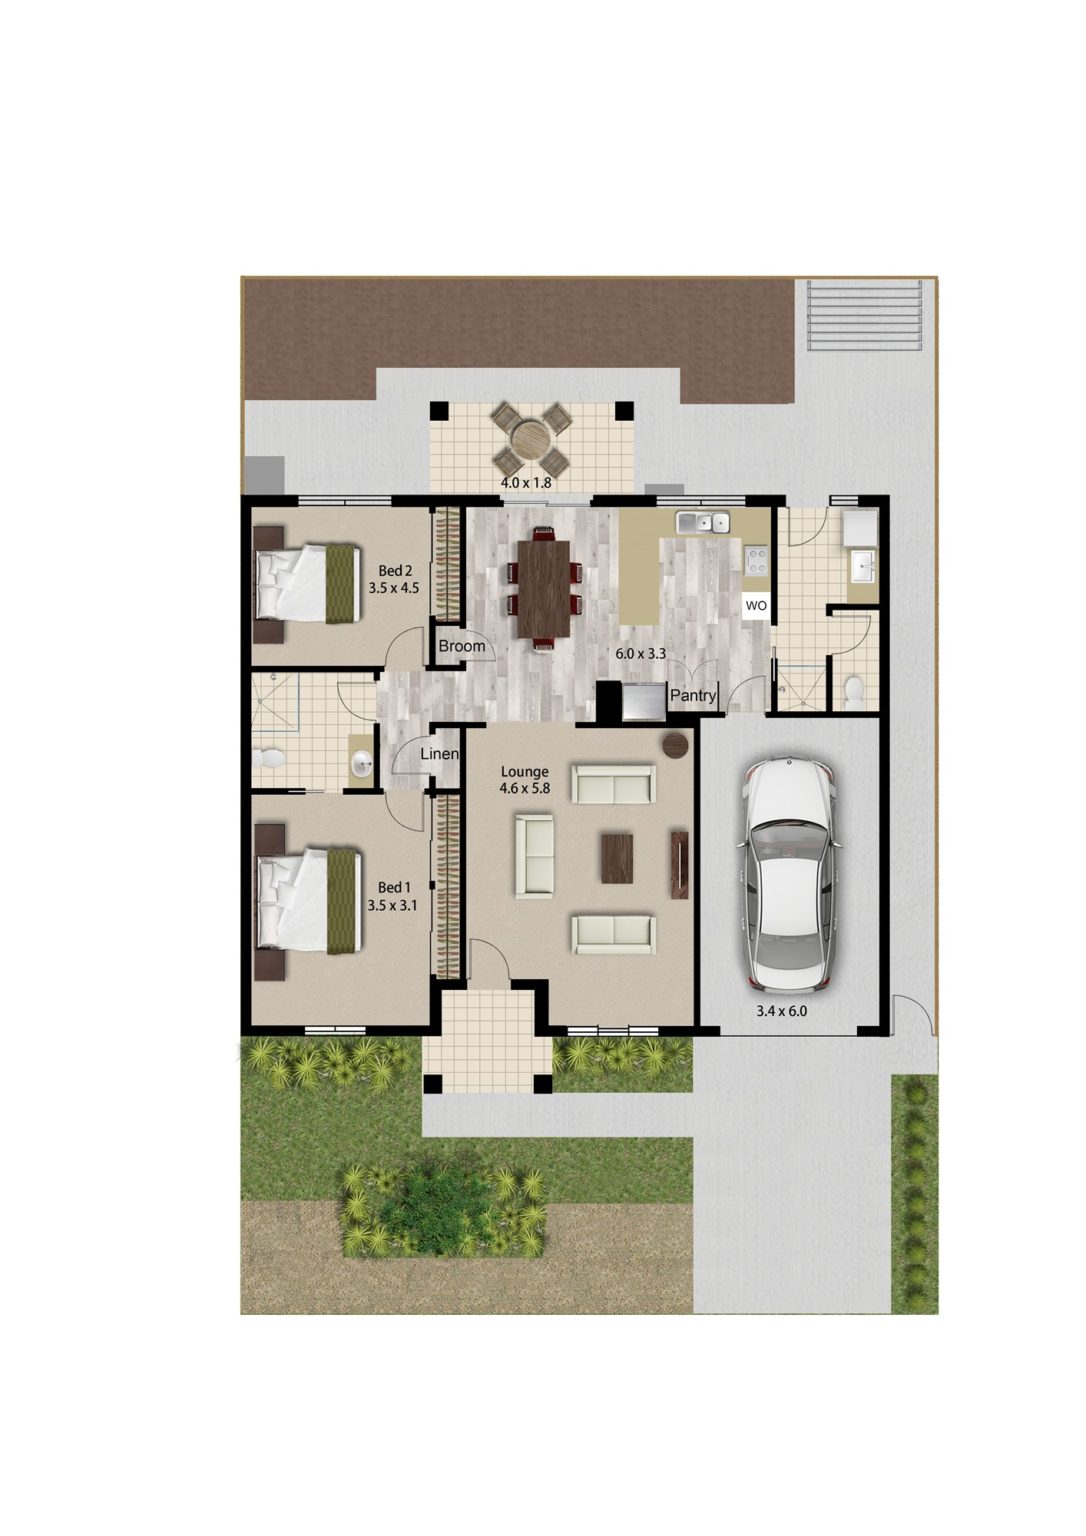 agent202_residential_floorplan_149280.jpg